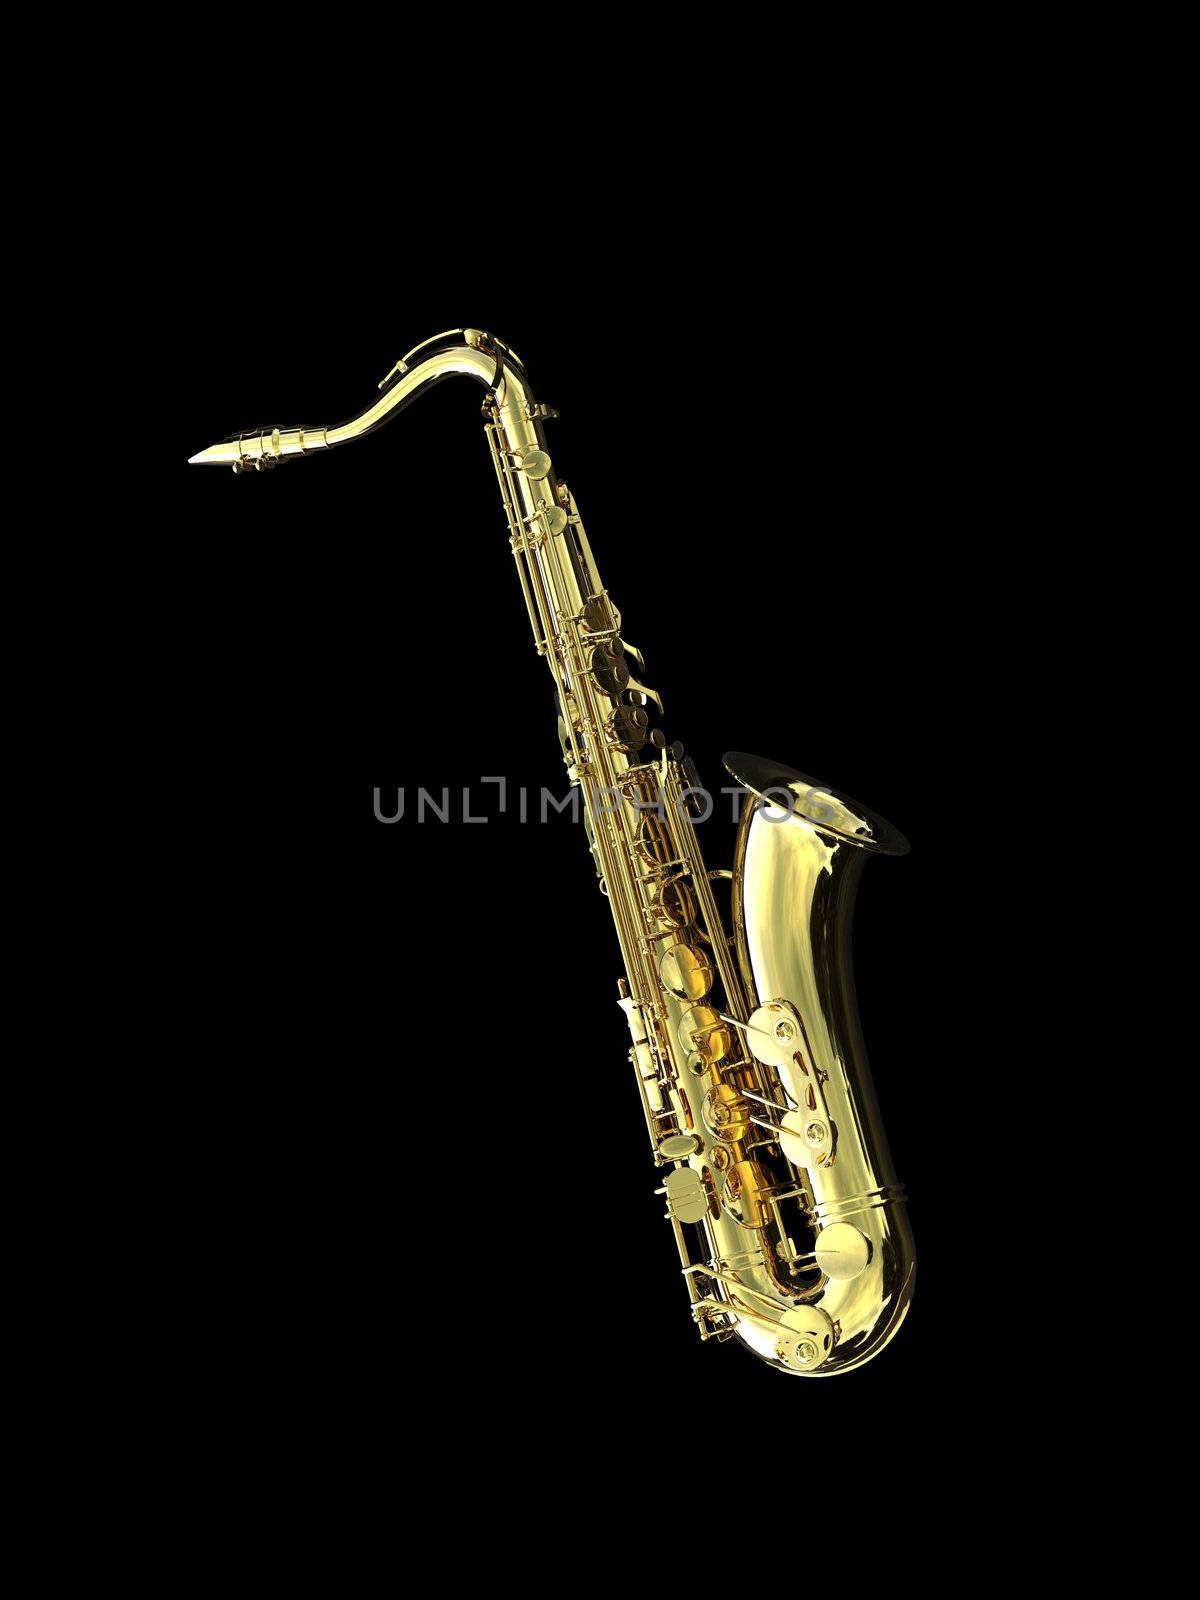 Saxophone by chrisroll